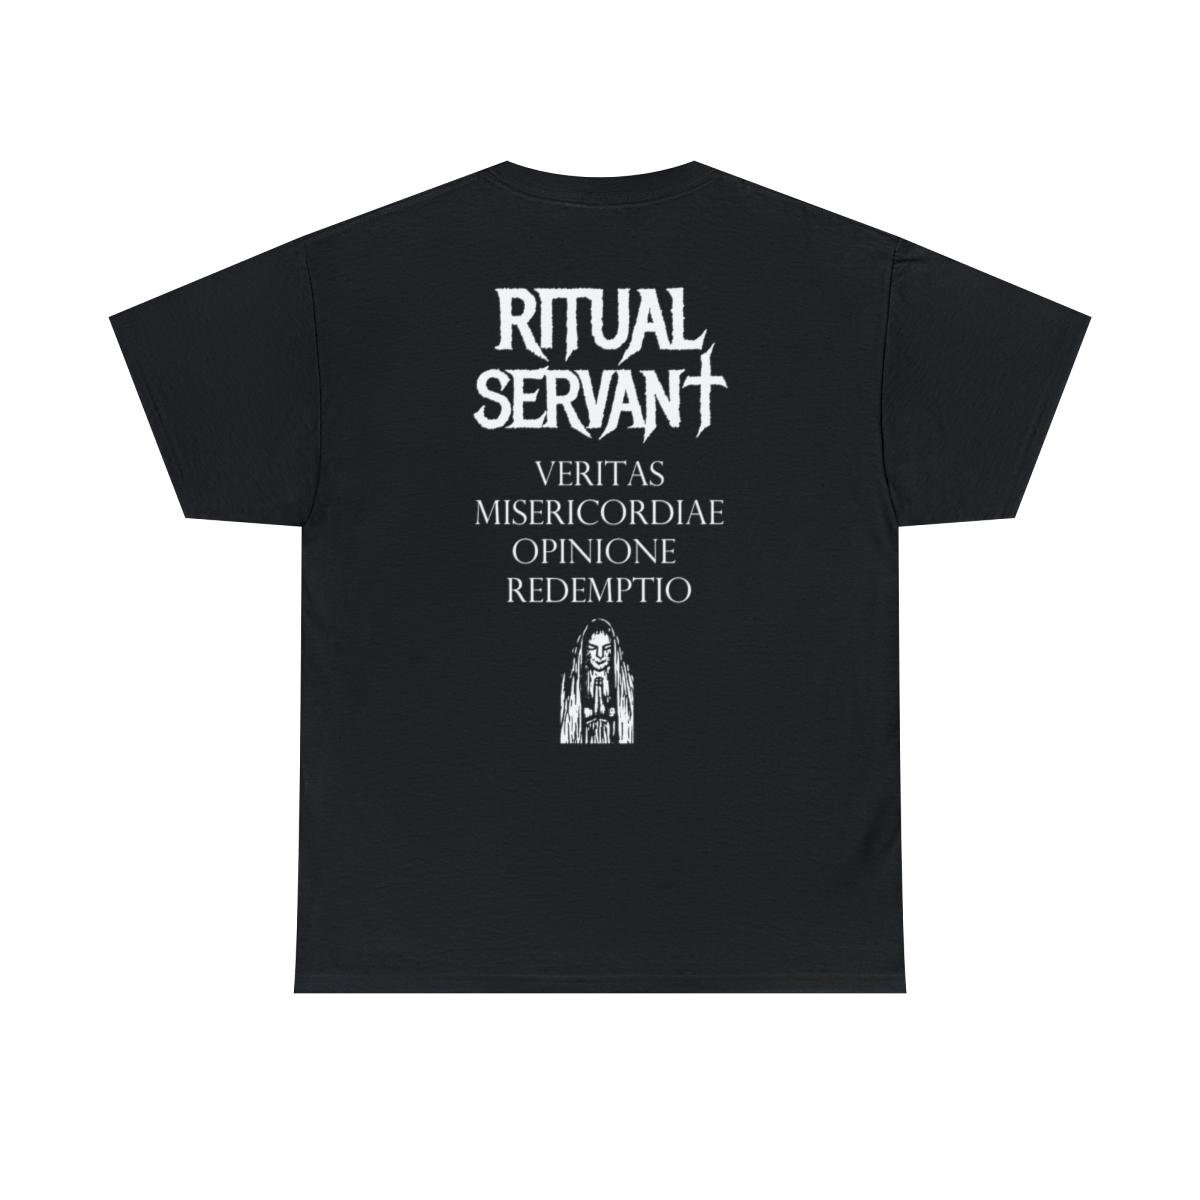 Ritual Servant – Archangelorum Lucis Short Sleeve Tshirt (2-Sided)